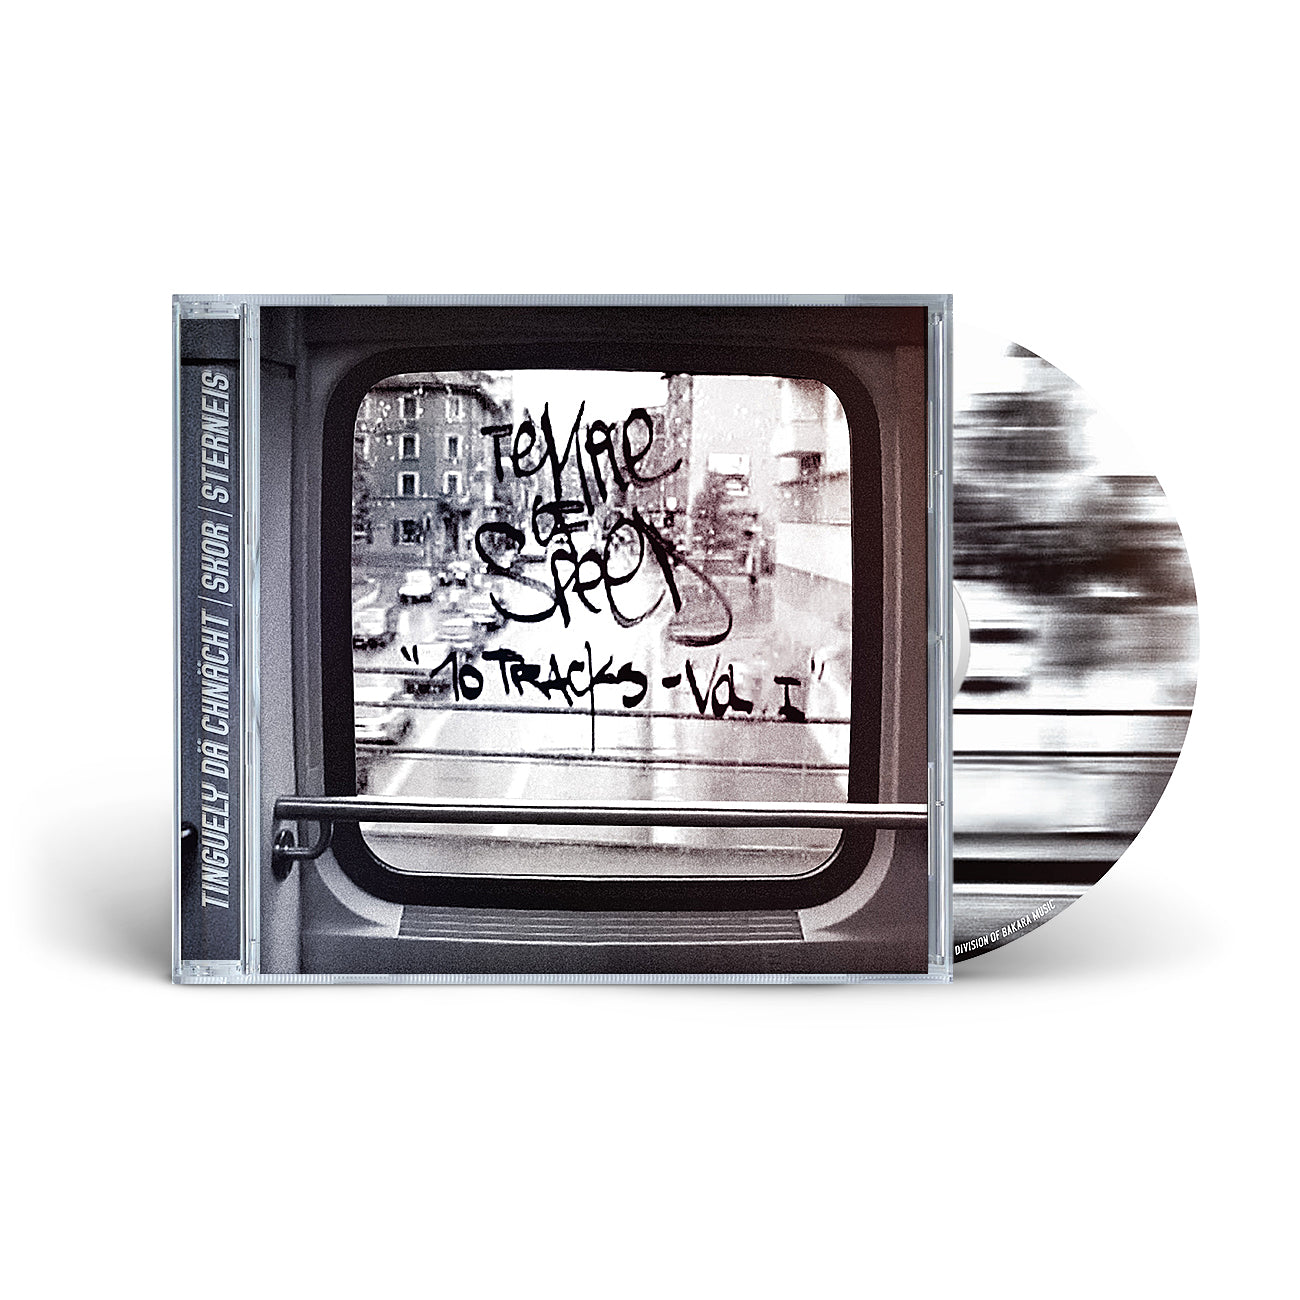 Temple of Speed | CD | 10 Tracks - Vol. 1